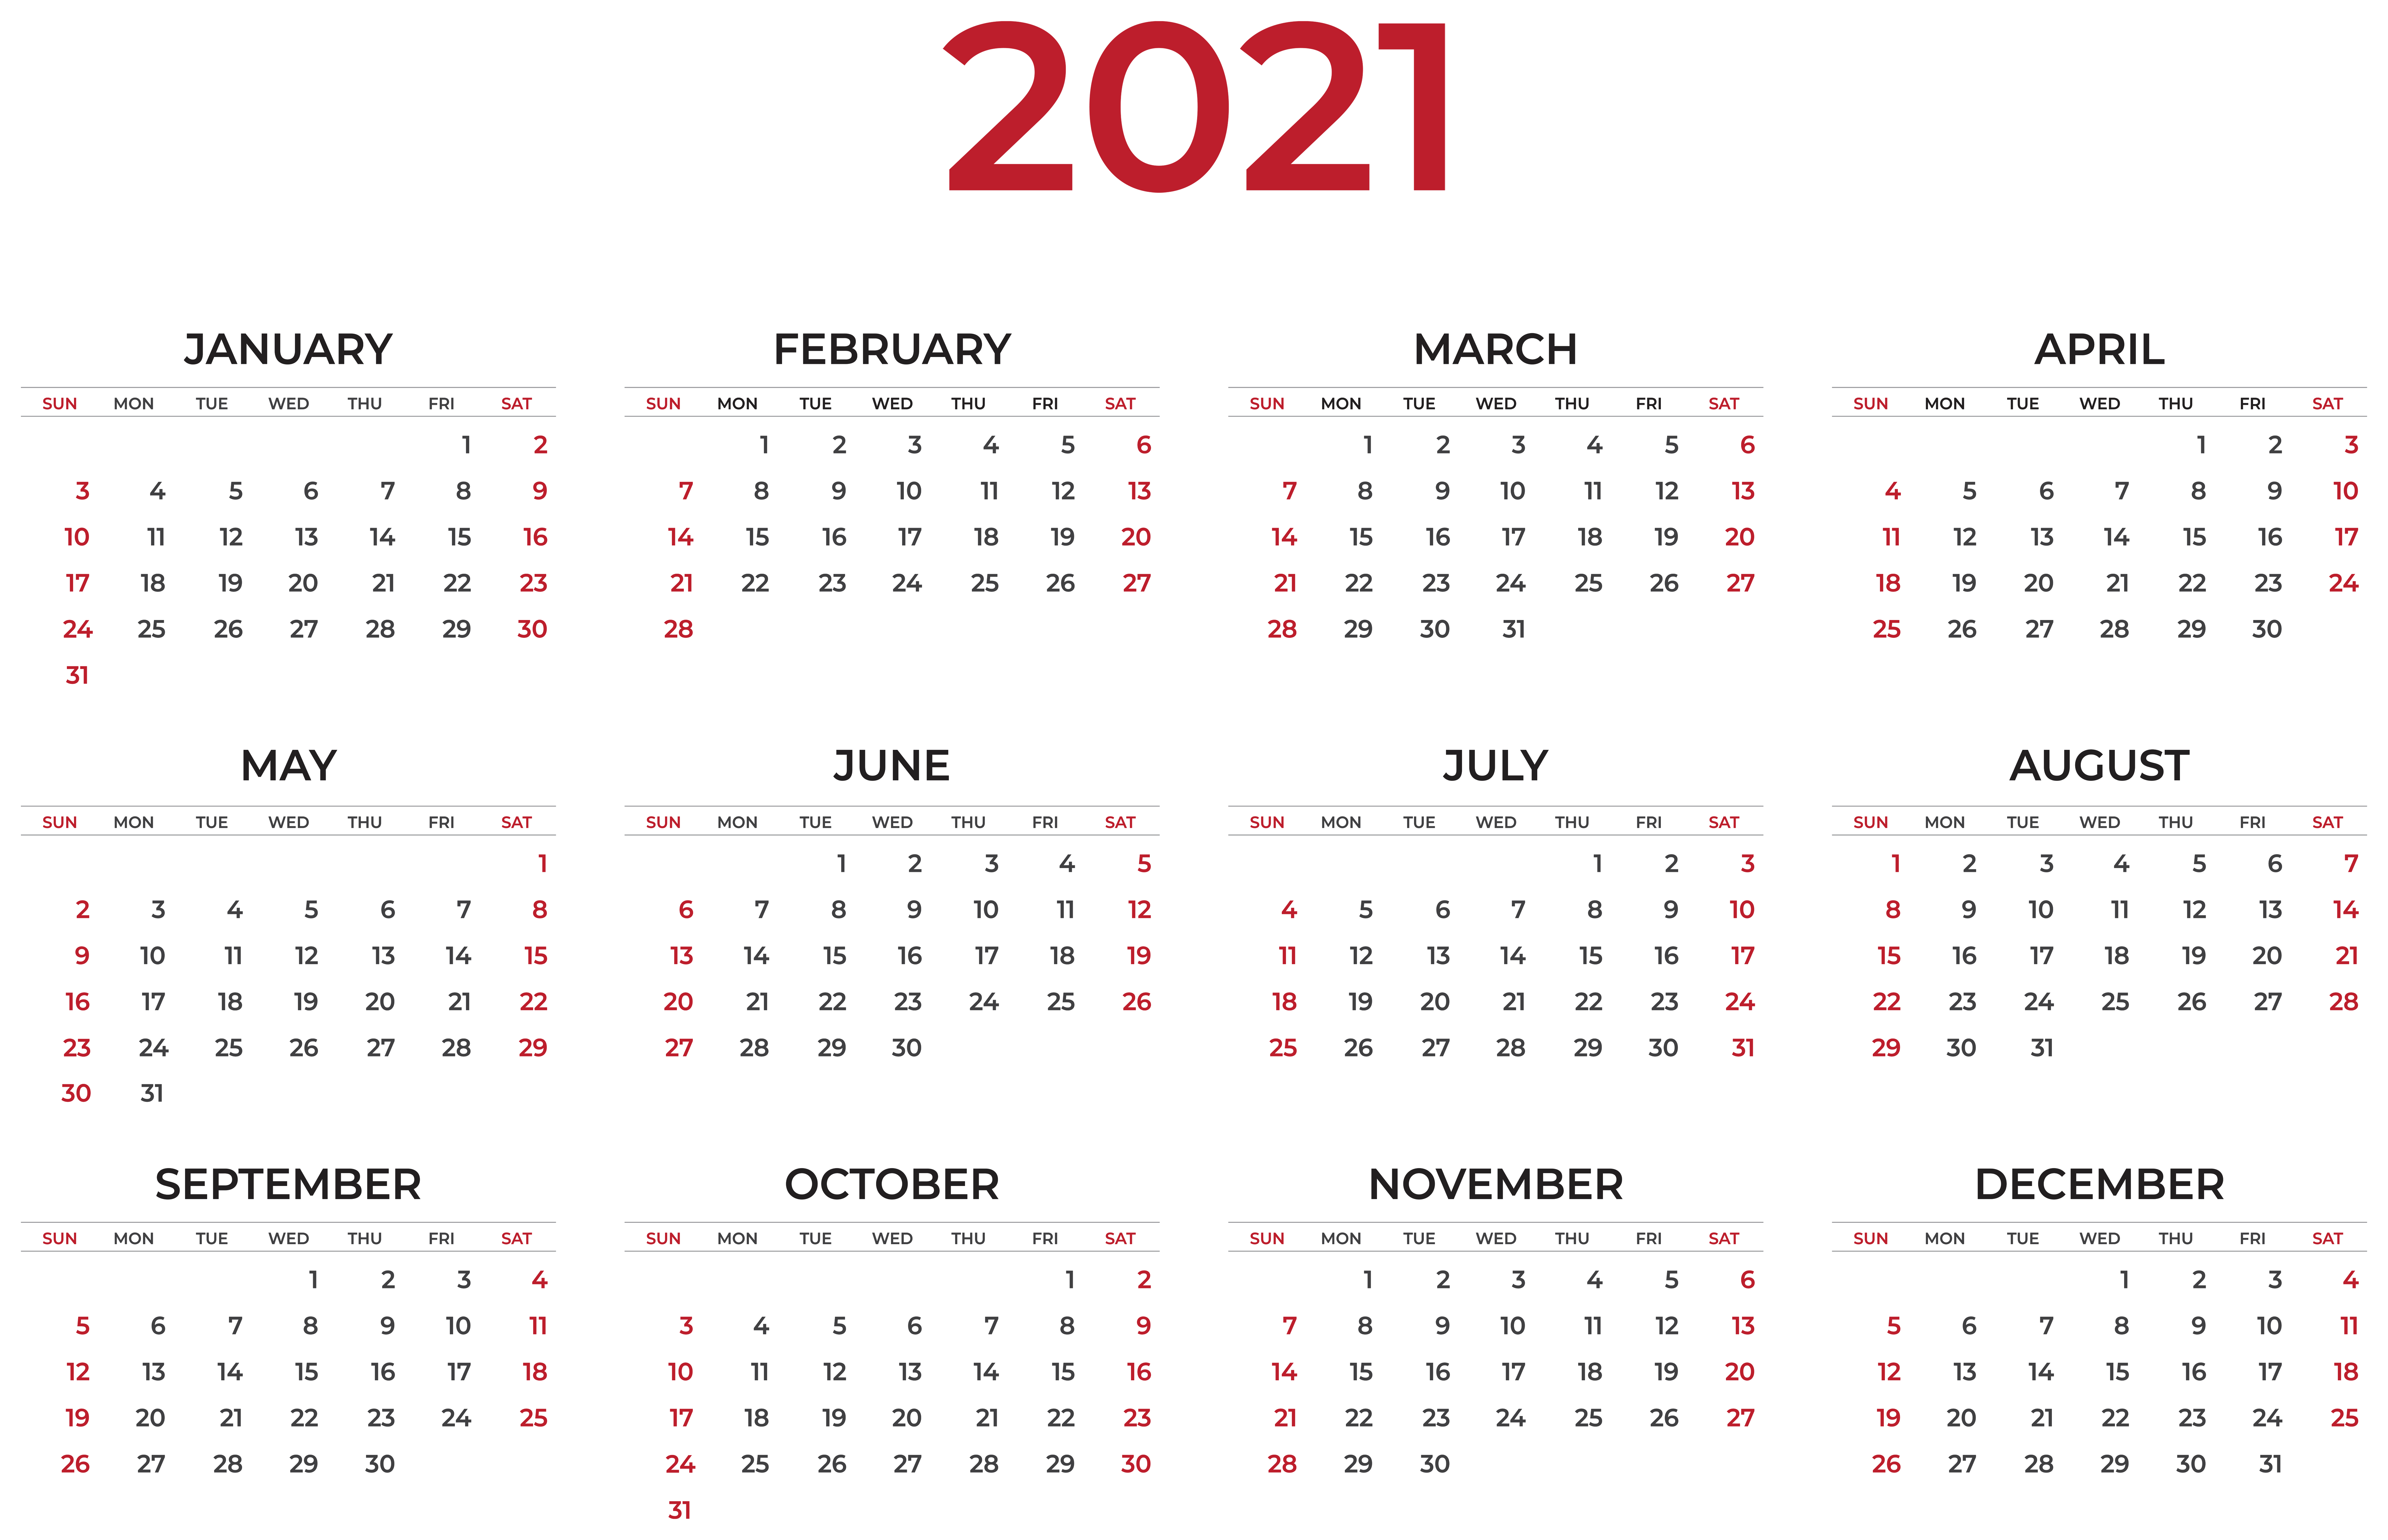 uml 2021 spring calendar 2021 Calendar Transparent Clipart Gallery Yopriceville High Quality Images And Transparent Png Free Clipart uml 2021 spring calendar